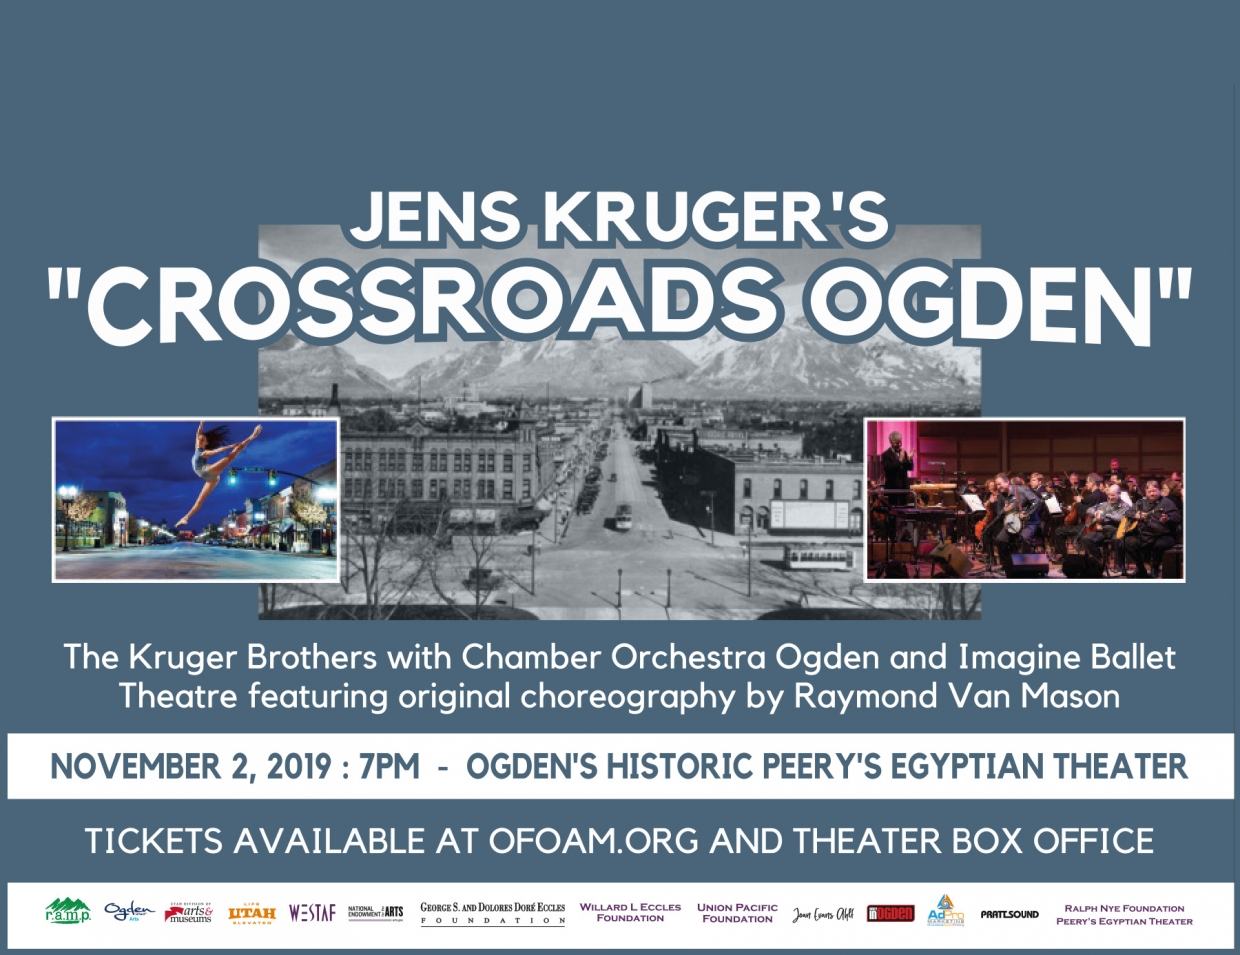 OFOAM presents Crossroads Ogden, World Premiere Peery’s Egyptian Theater - November 2, 2019